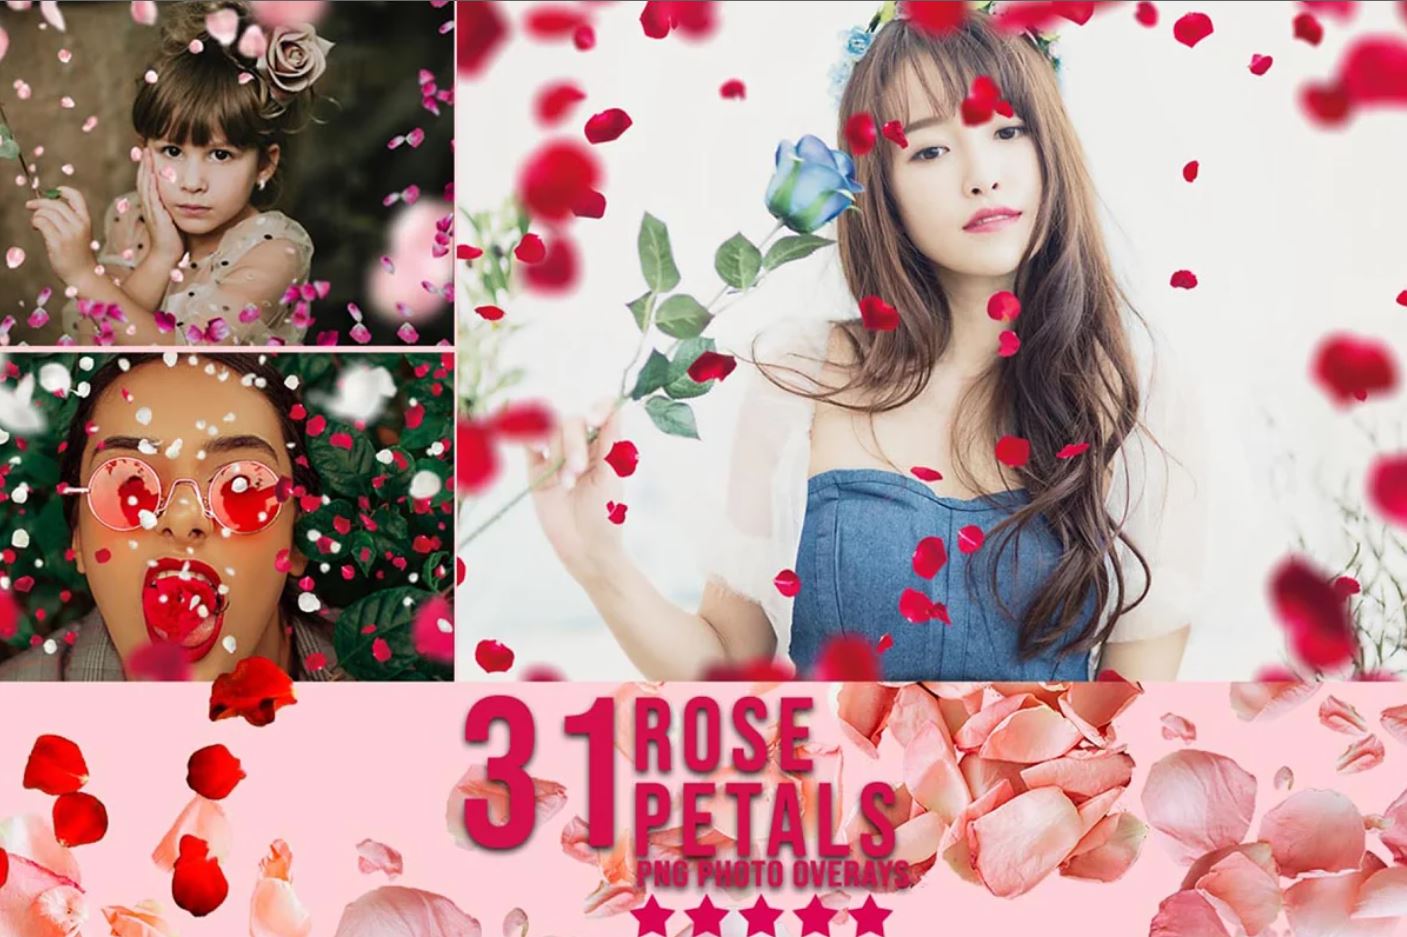 Rose-petal-overlay-free-download